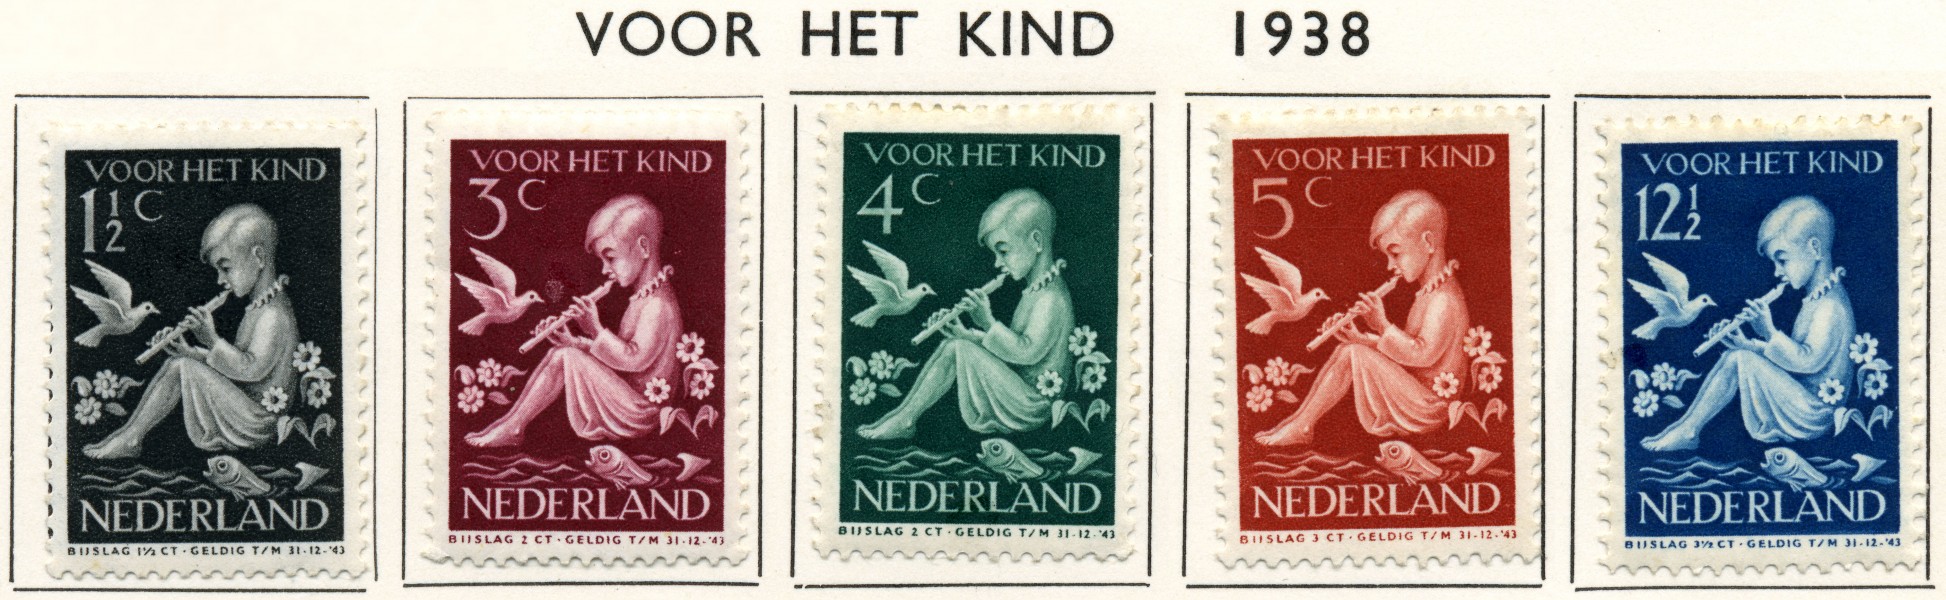 Postzegel NL 1938 nr313-317